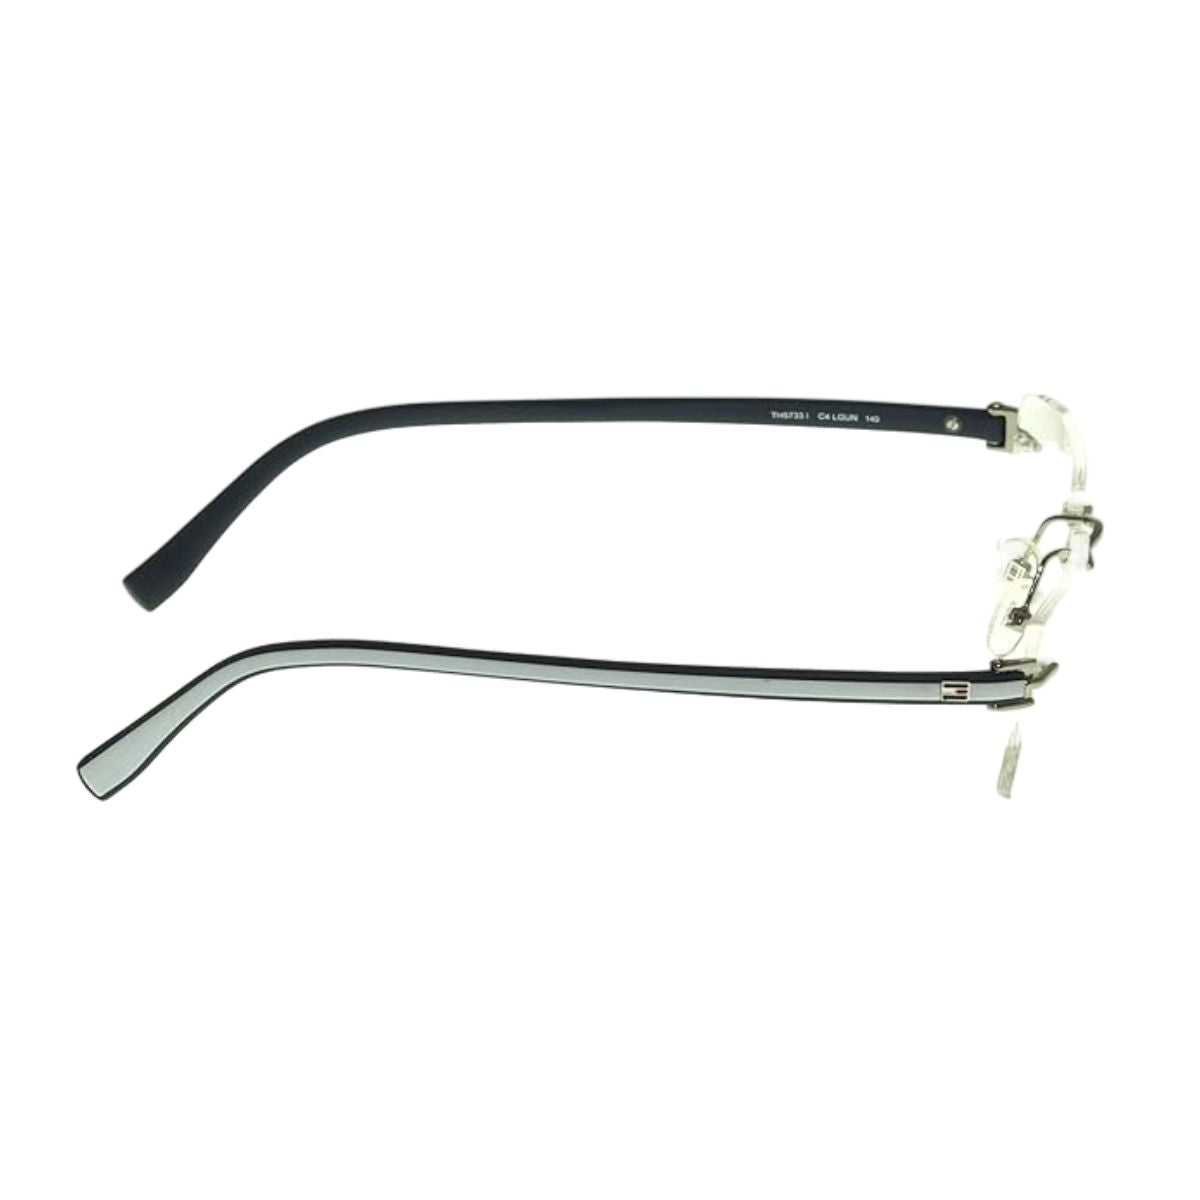 "Tommy Hilfiger 5733 C4 eyesight glasses frame for women's online at optorium"